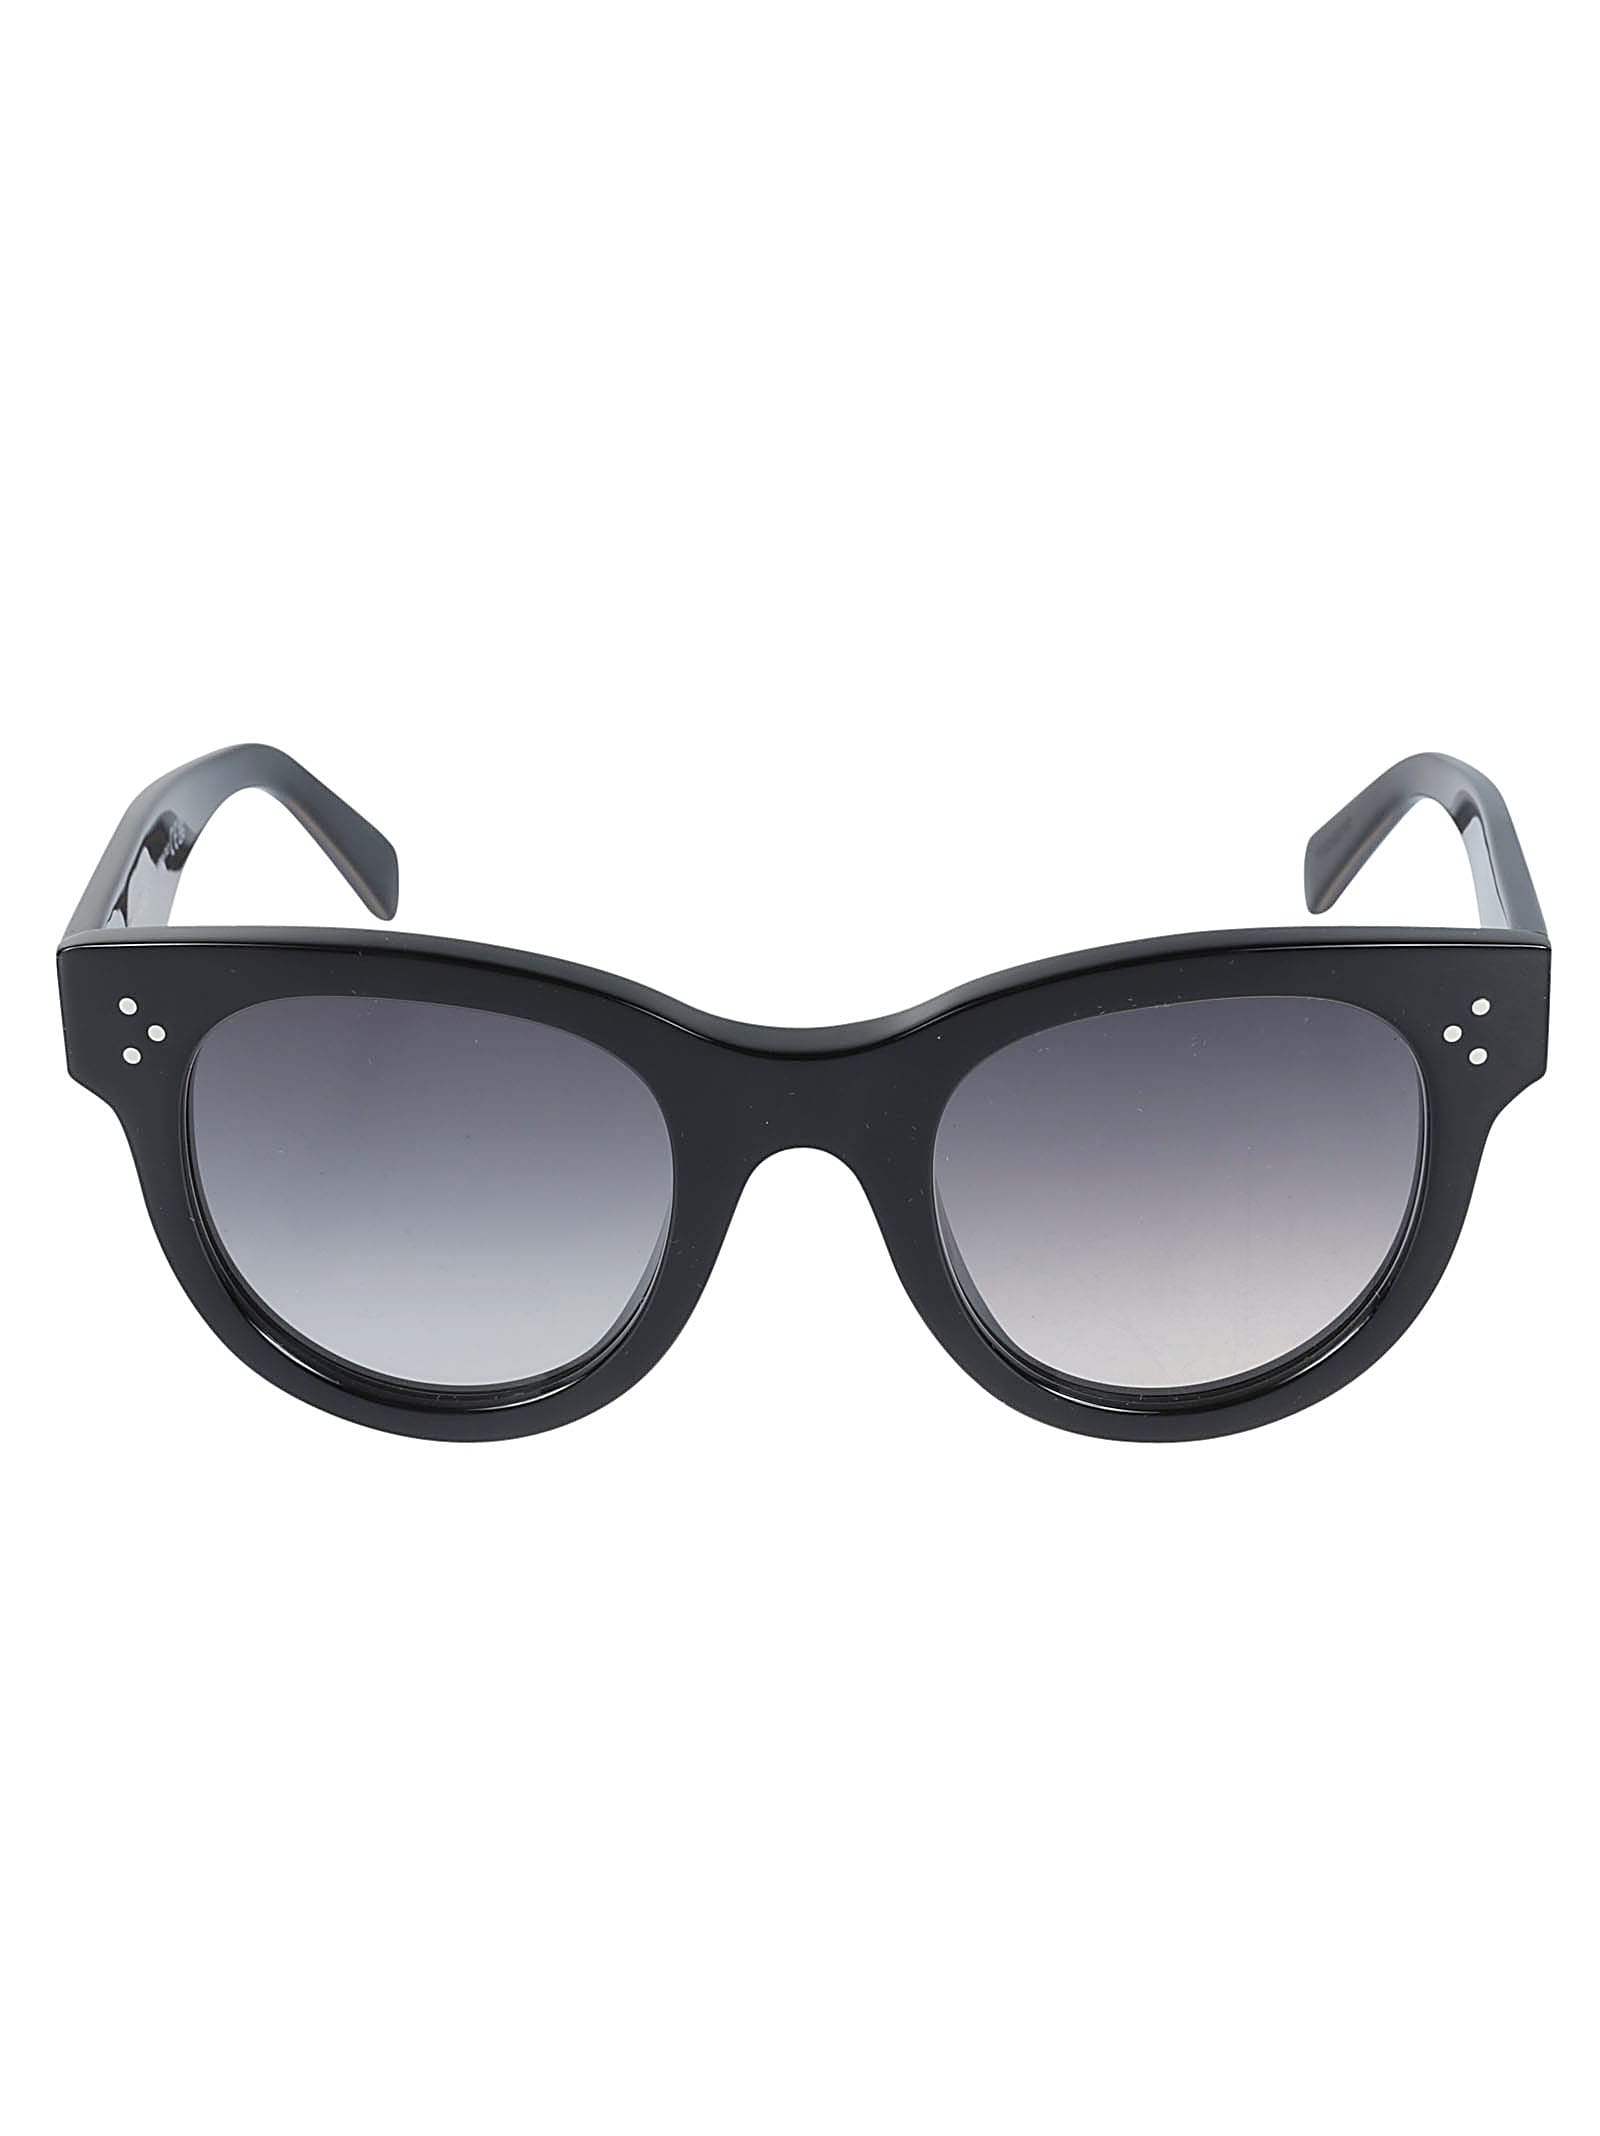 Celine Retro Square Sunglasses